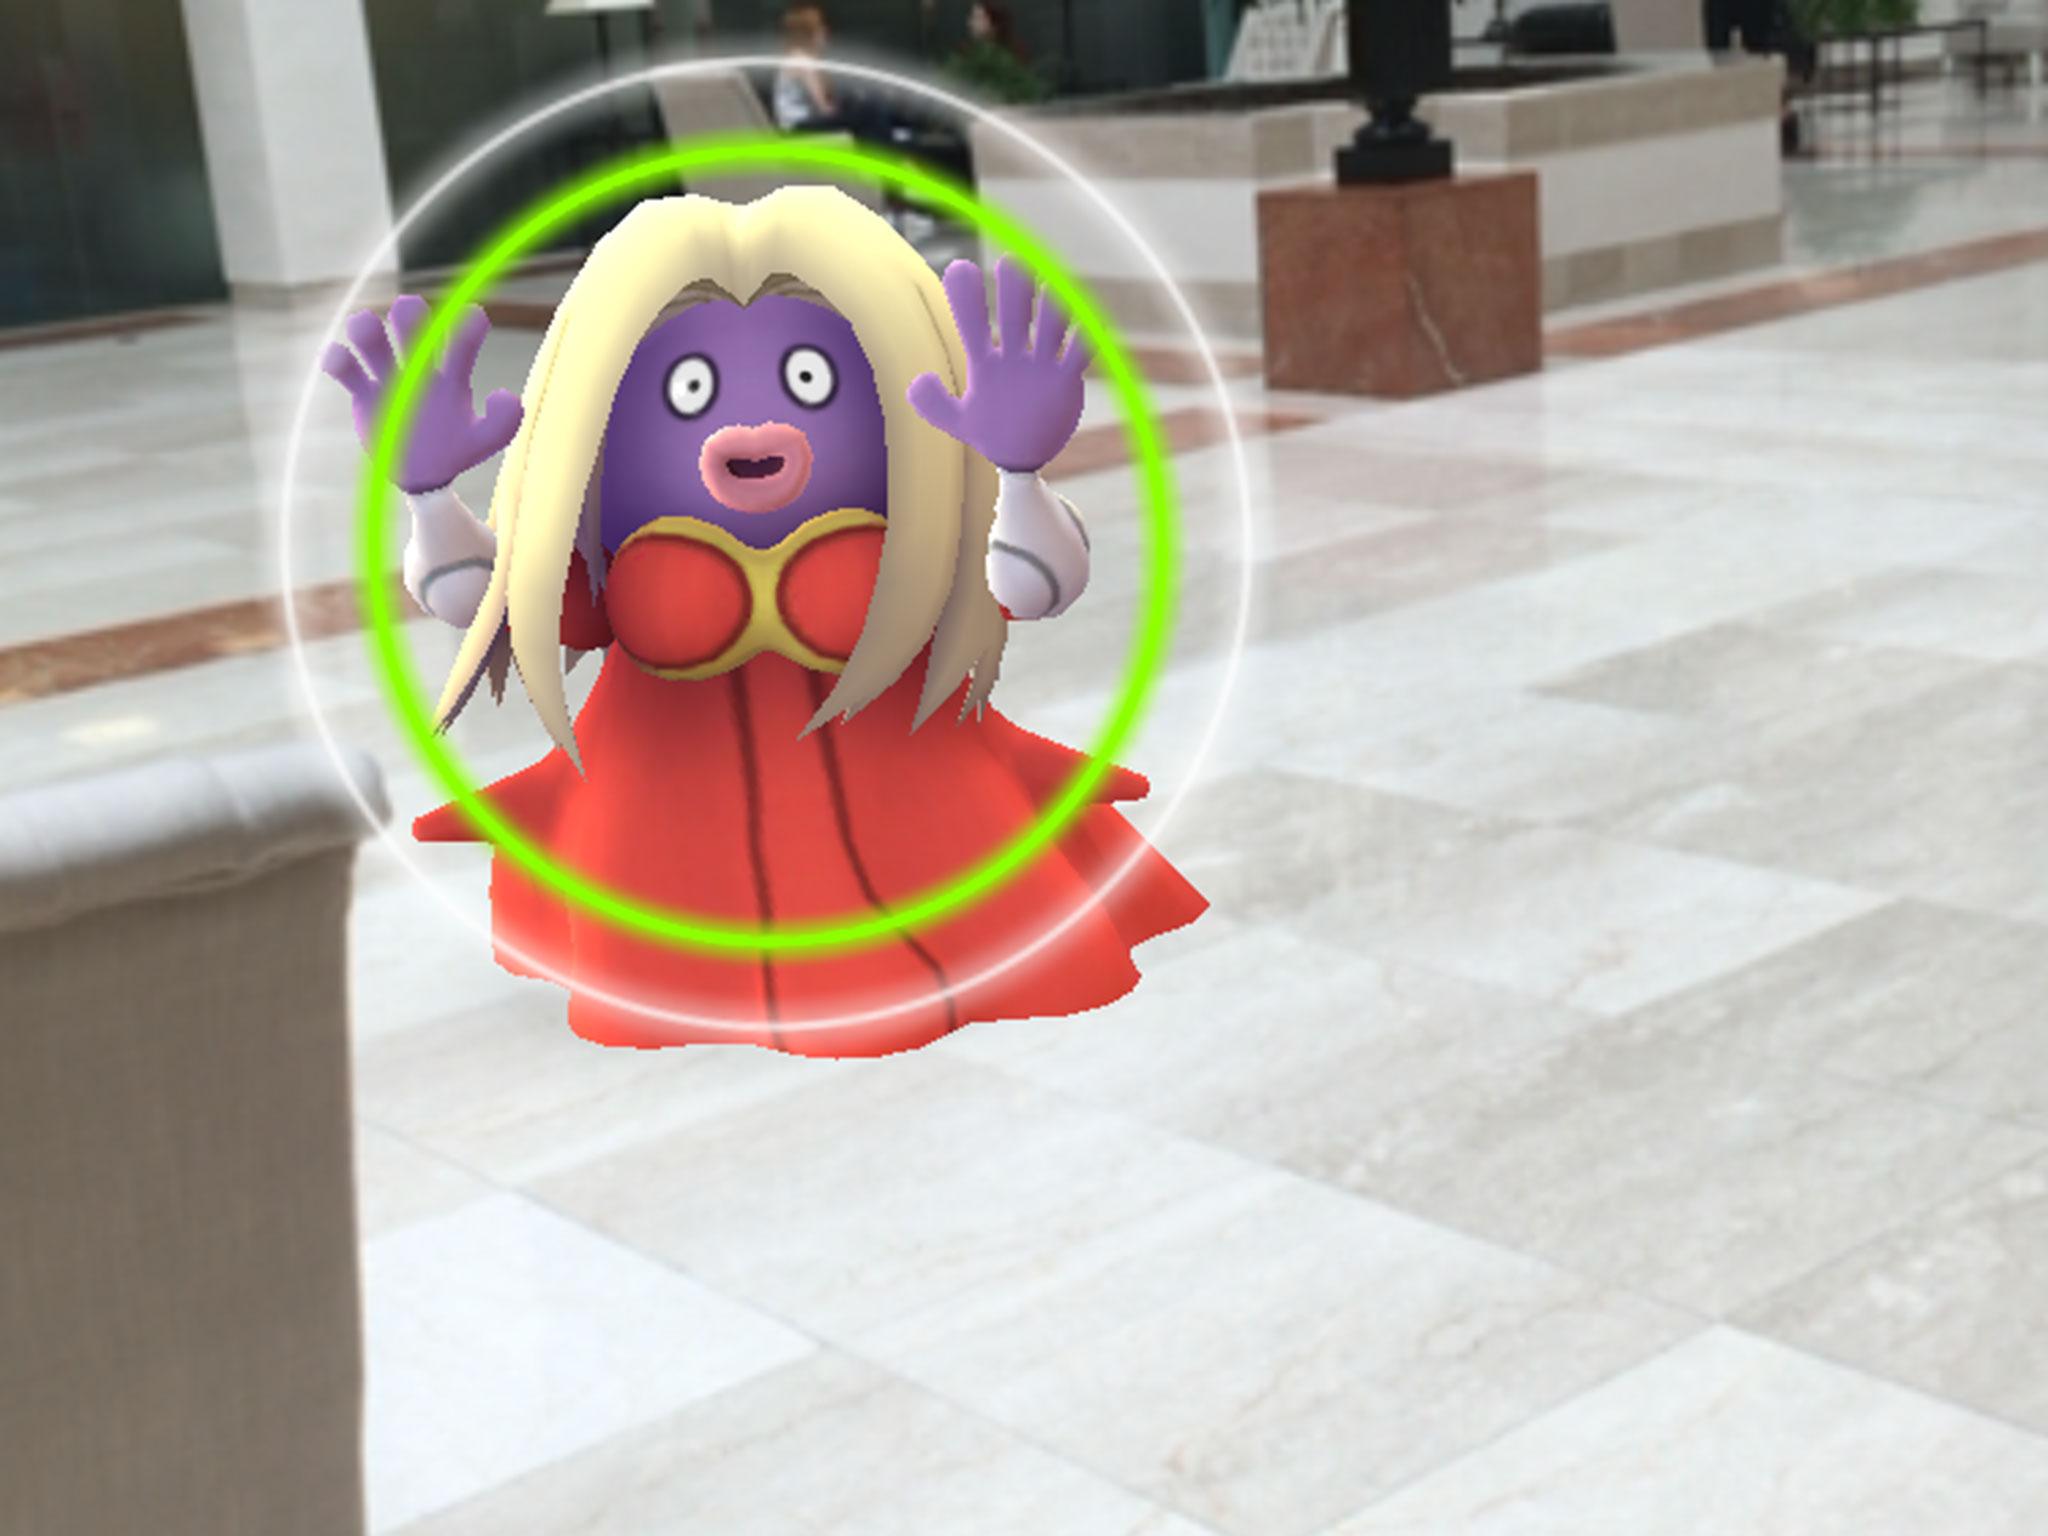 Our managing editor encounters a Jynx Pokémon near the canteen